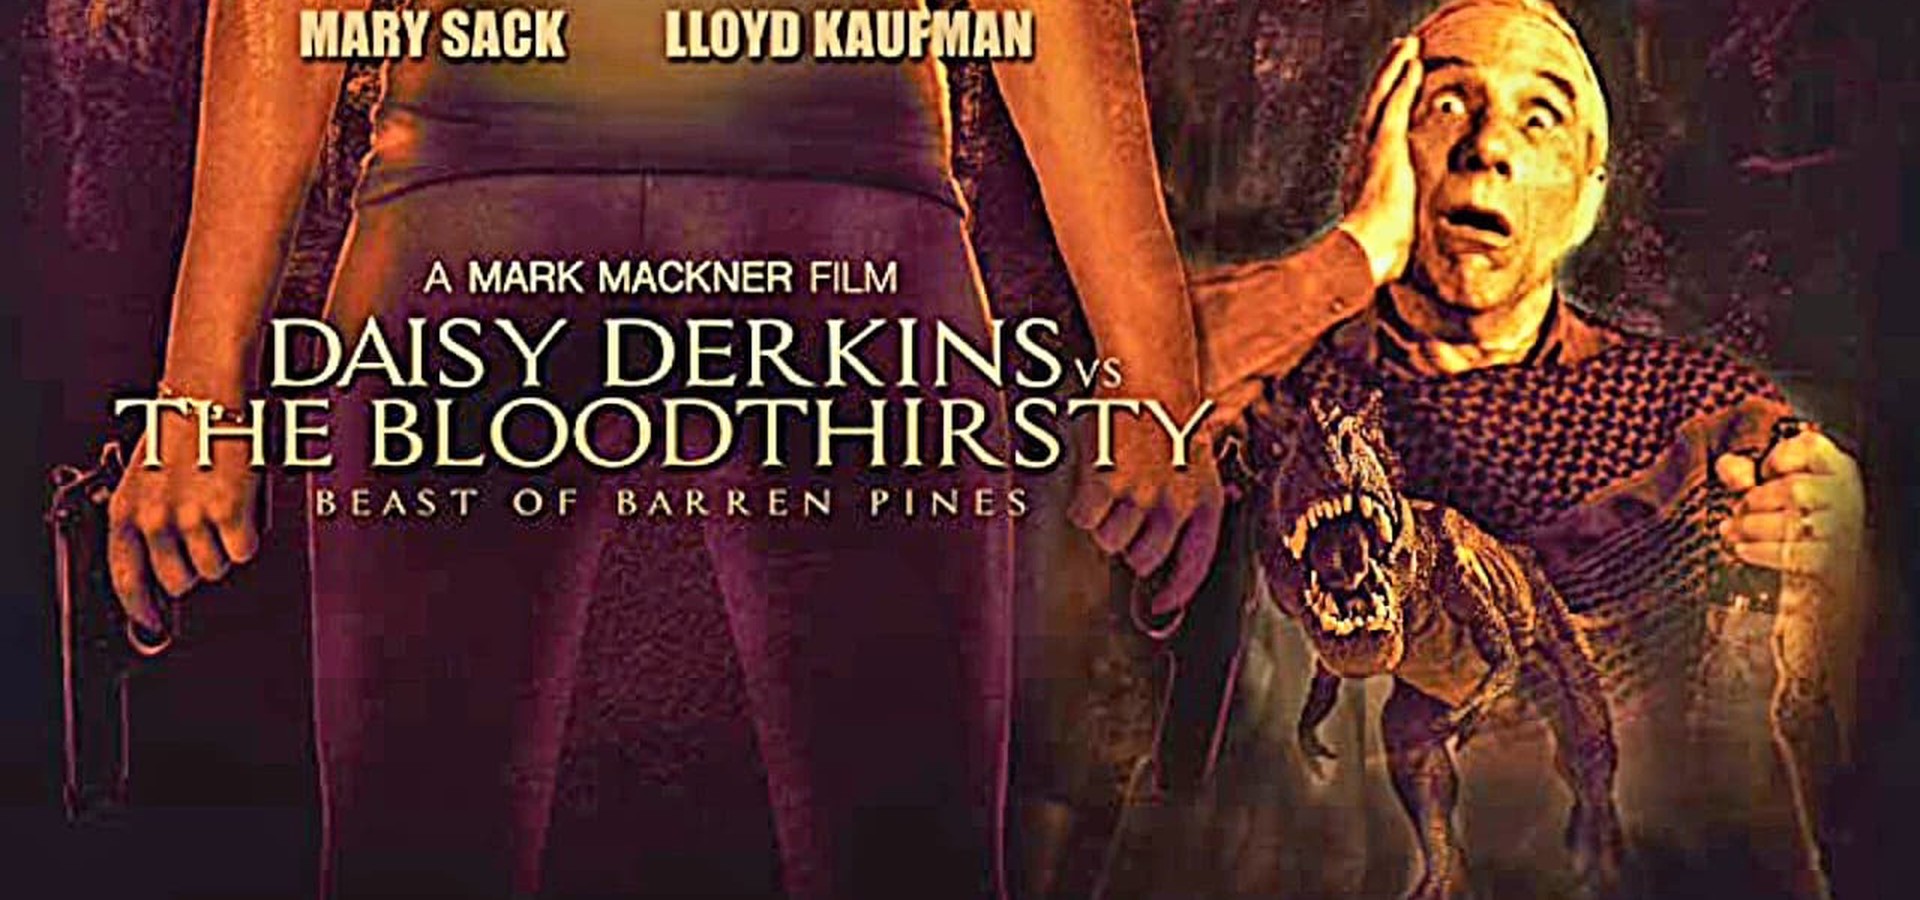 Daisy Derkins vs. The Bloodthirsty Beast of Barren Pines!